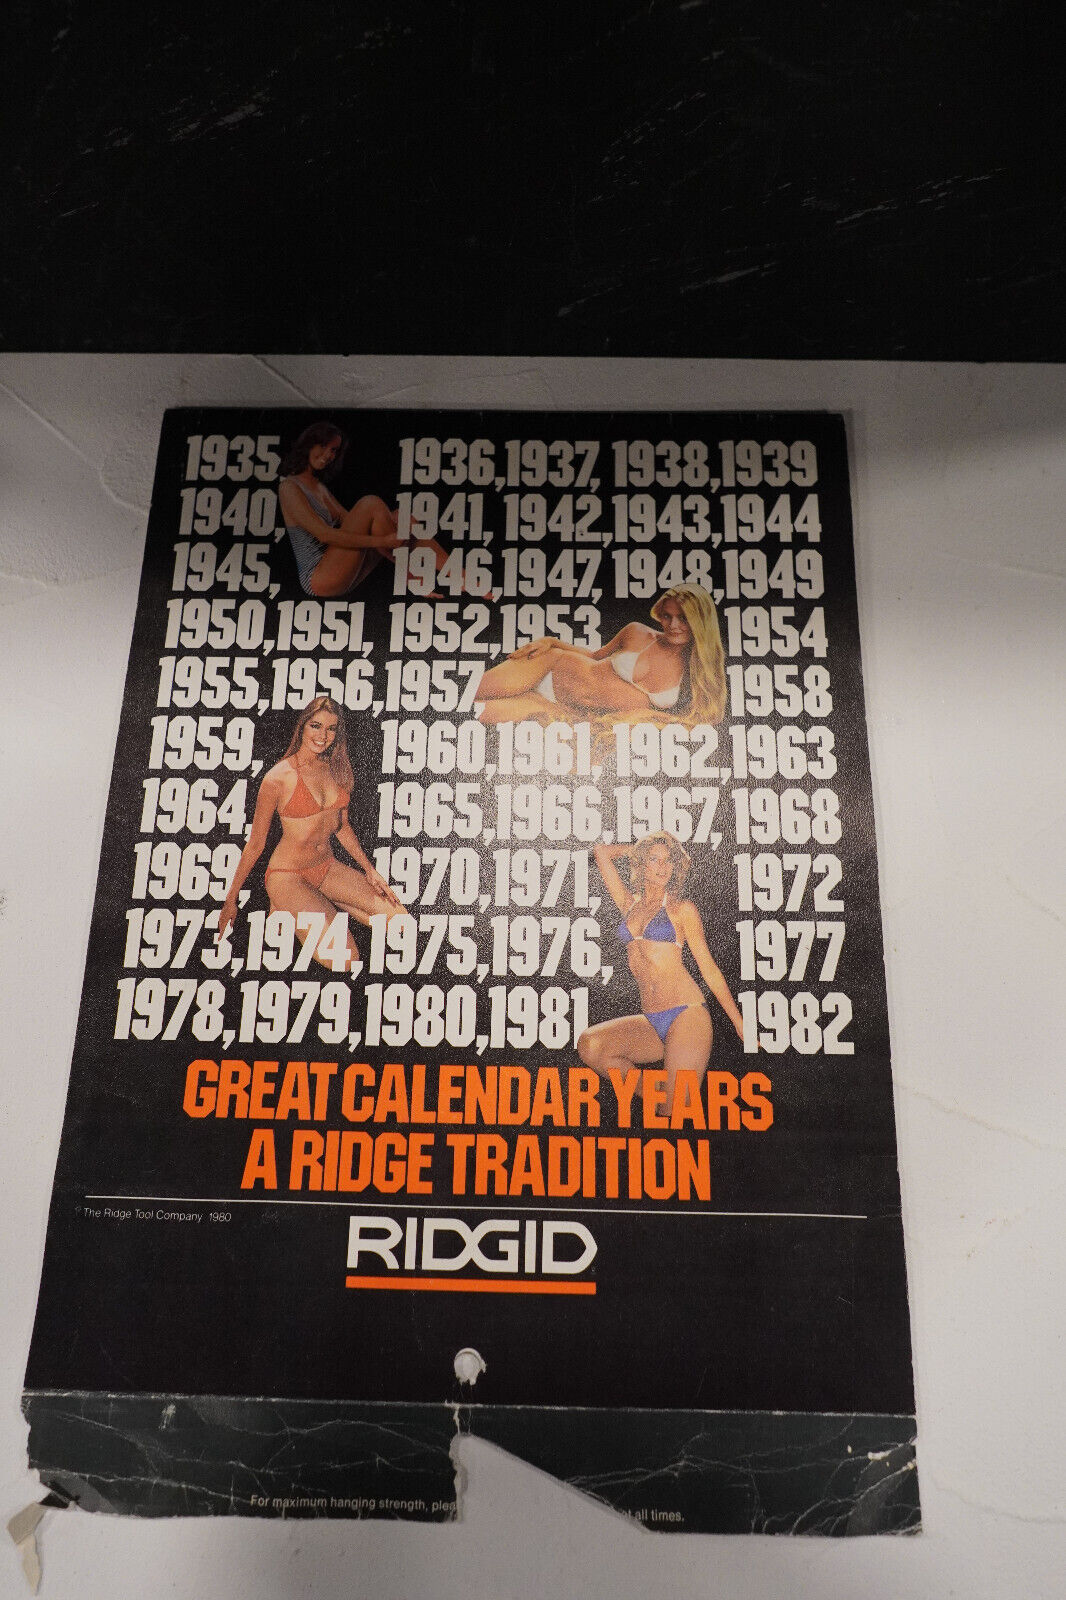 RIDGID 1981-1982 Calendar - THE RIDGE TOOL CO. -  MAN CAVE